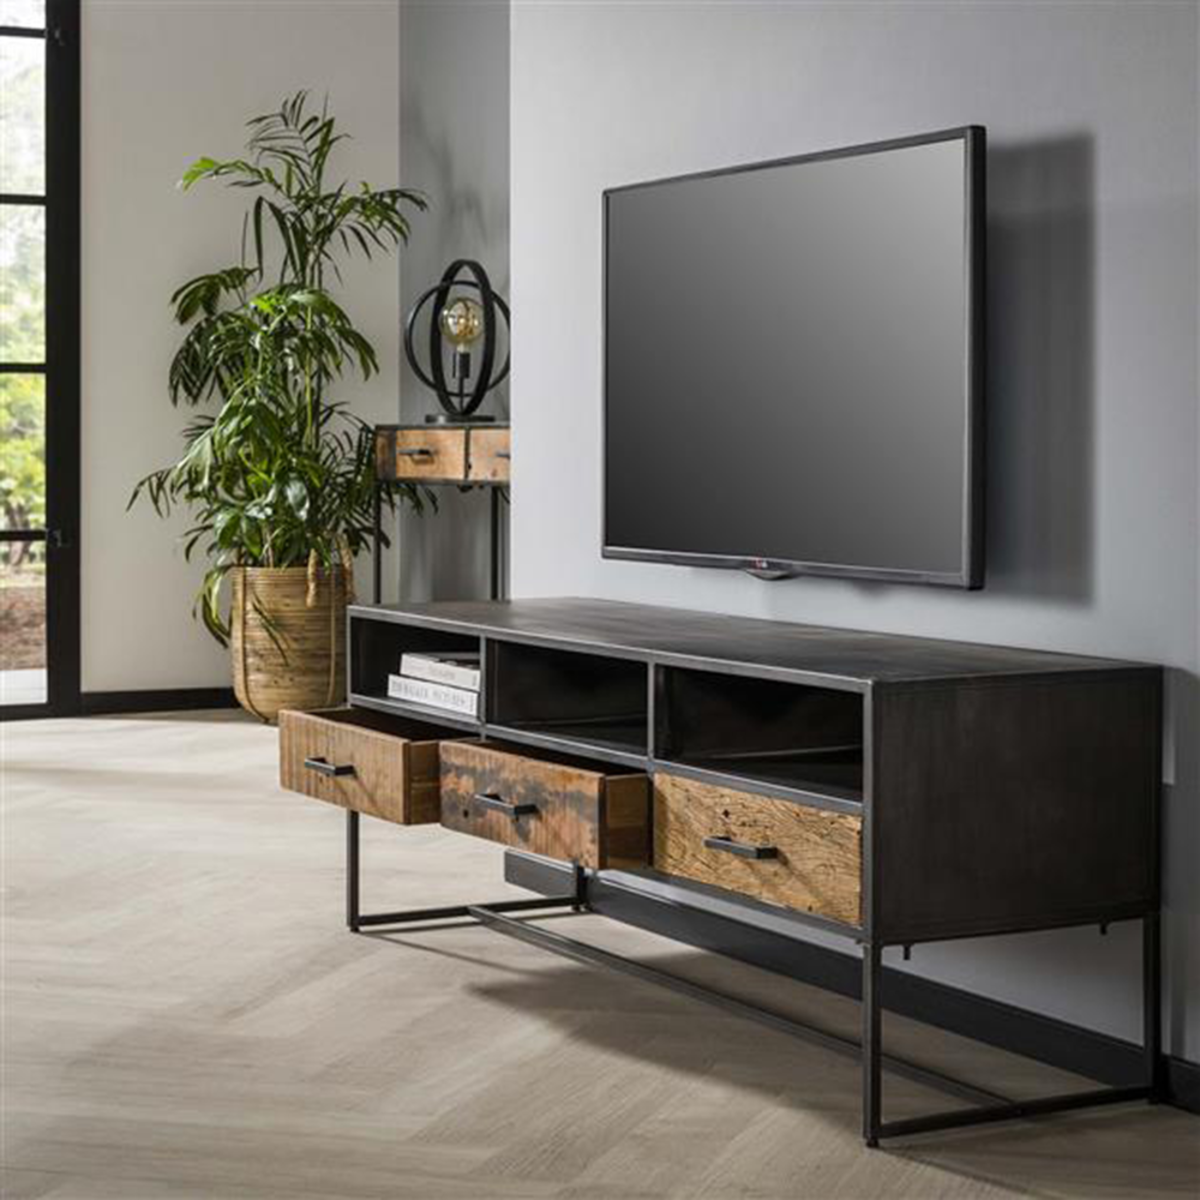 vergroting genie Deter TV-meubel metaal zwart Zayn hardhout 3 lades | Livin24